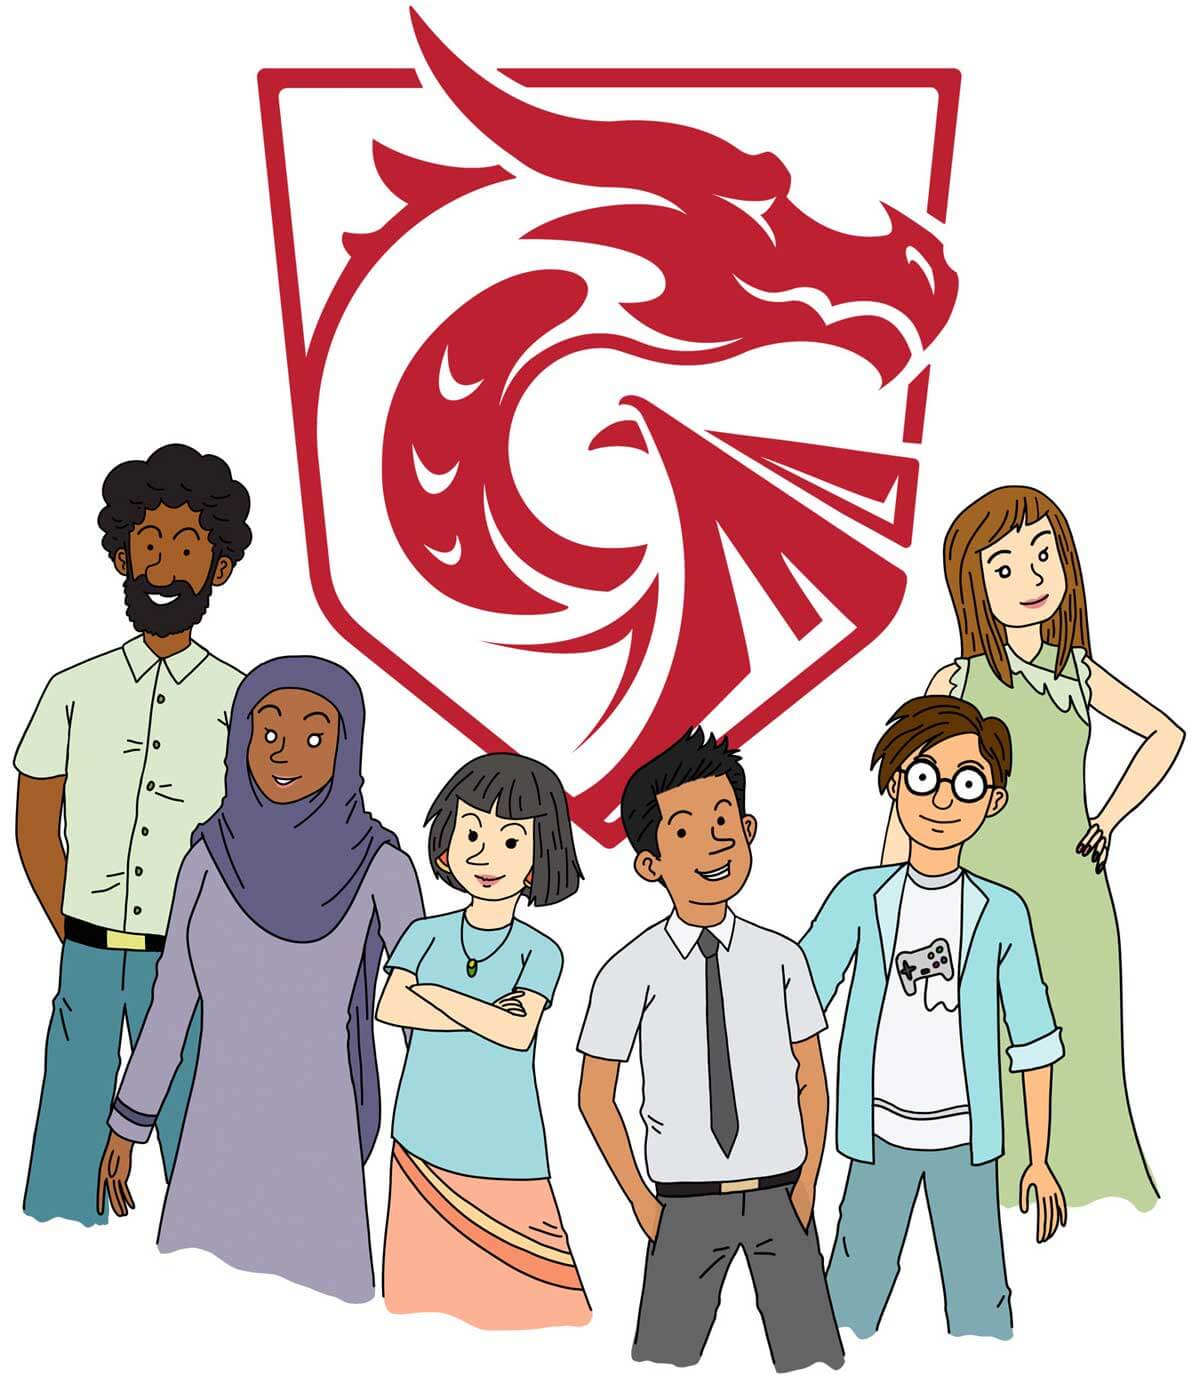 Seis estudiantes reunidos alrededor del logo de DigiPen.